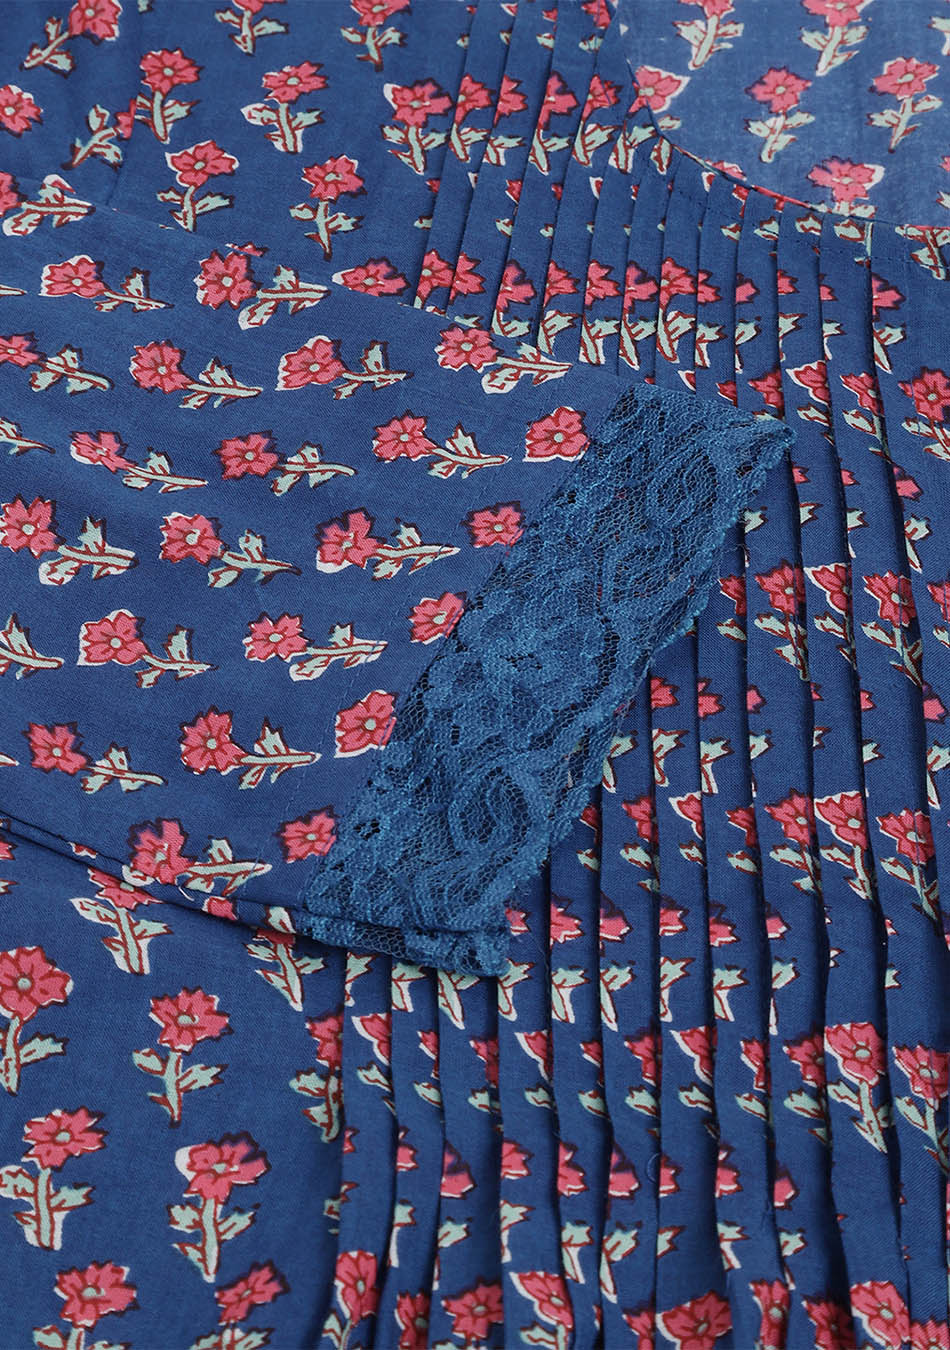 Navy Blue Floral Printed Cotton Peplum Top